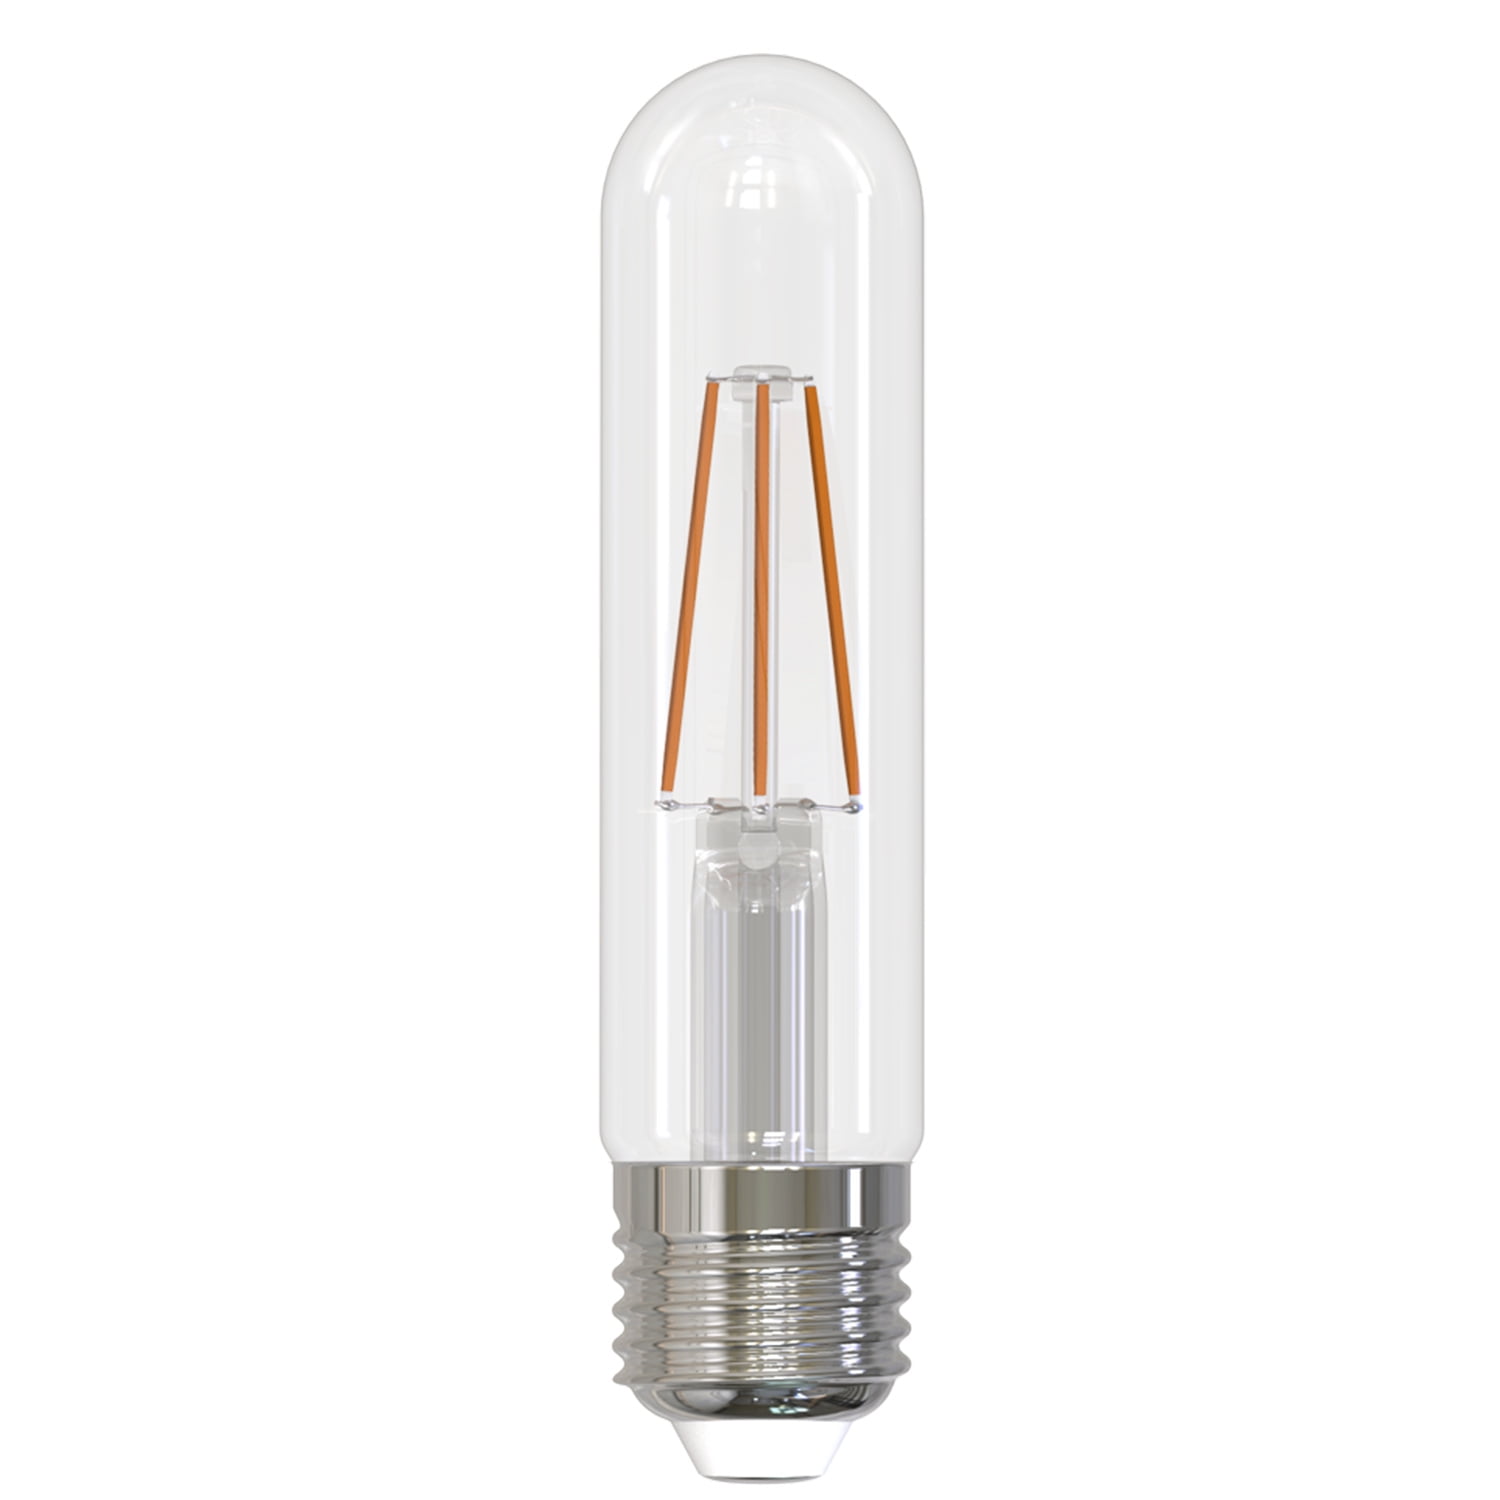 Picture of Bulbrite Pack of (2) 3 Watt Dimmable Clear T9 LED Light Bulbs with Medium (E26) Base  3000K Soft White Light  250 Lumens